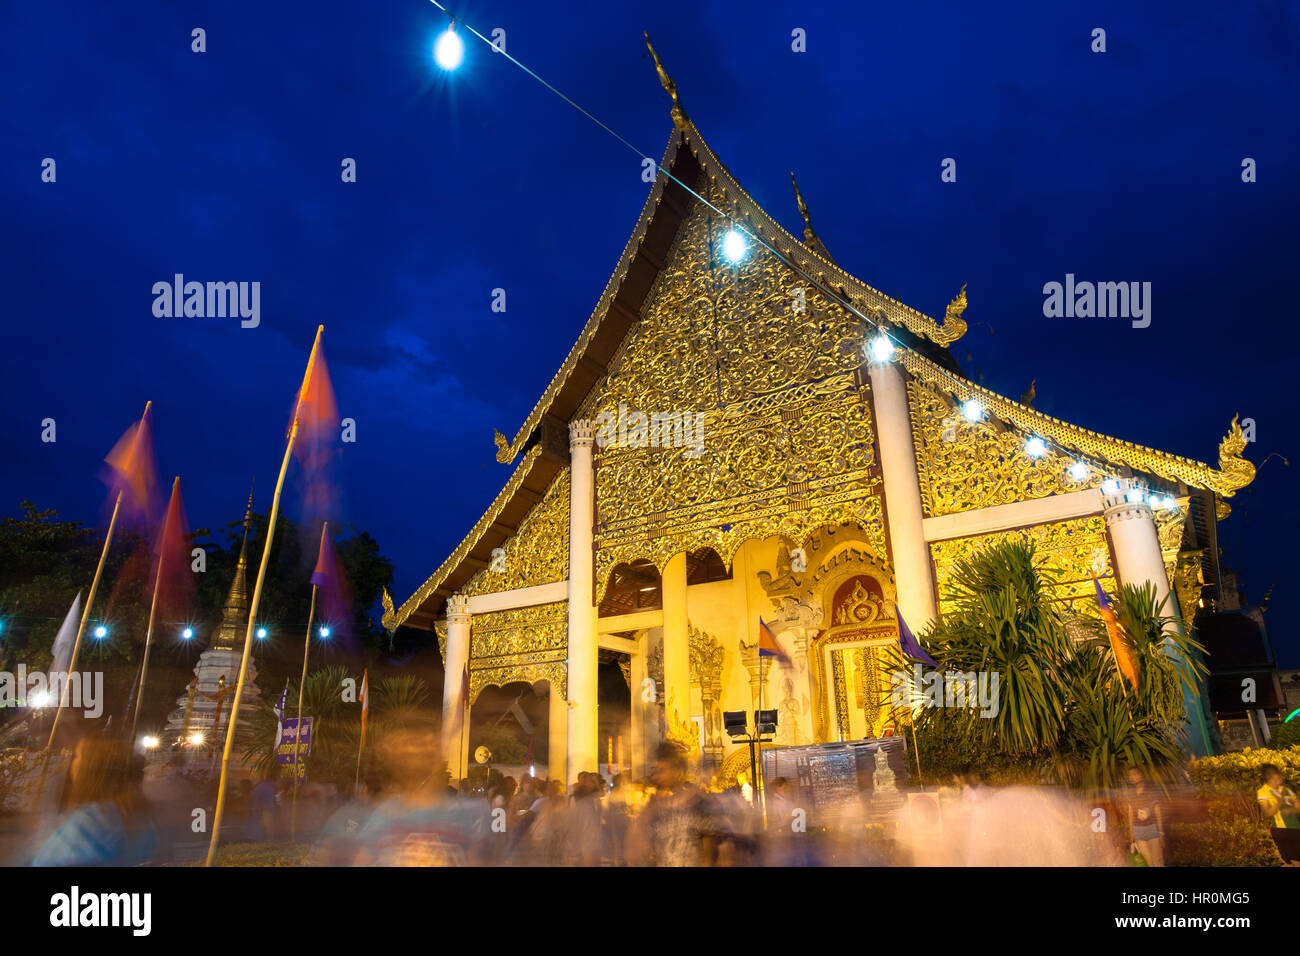 Chiang Mai, Thailand - 29 May, 2014: Crowd of people worshiping at Wat Chedi Luang during City Pillar Festival ( Inthakin Festival) Stock Photo